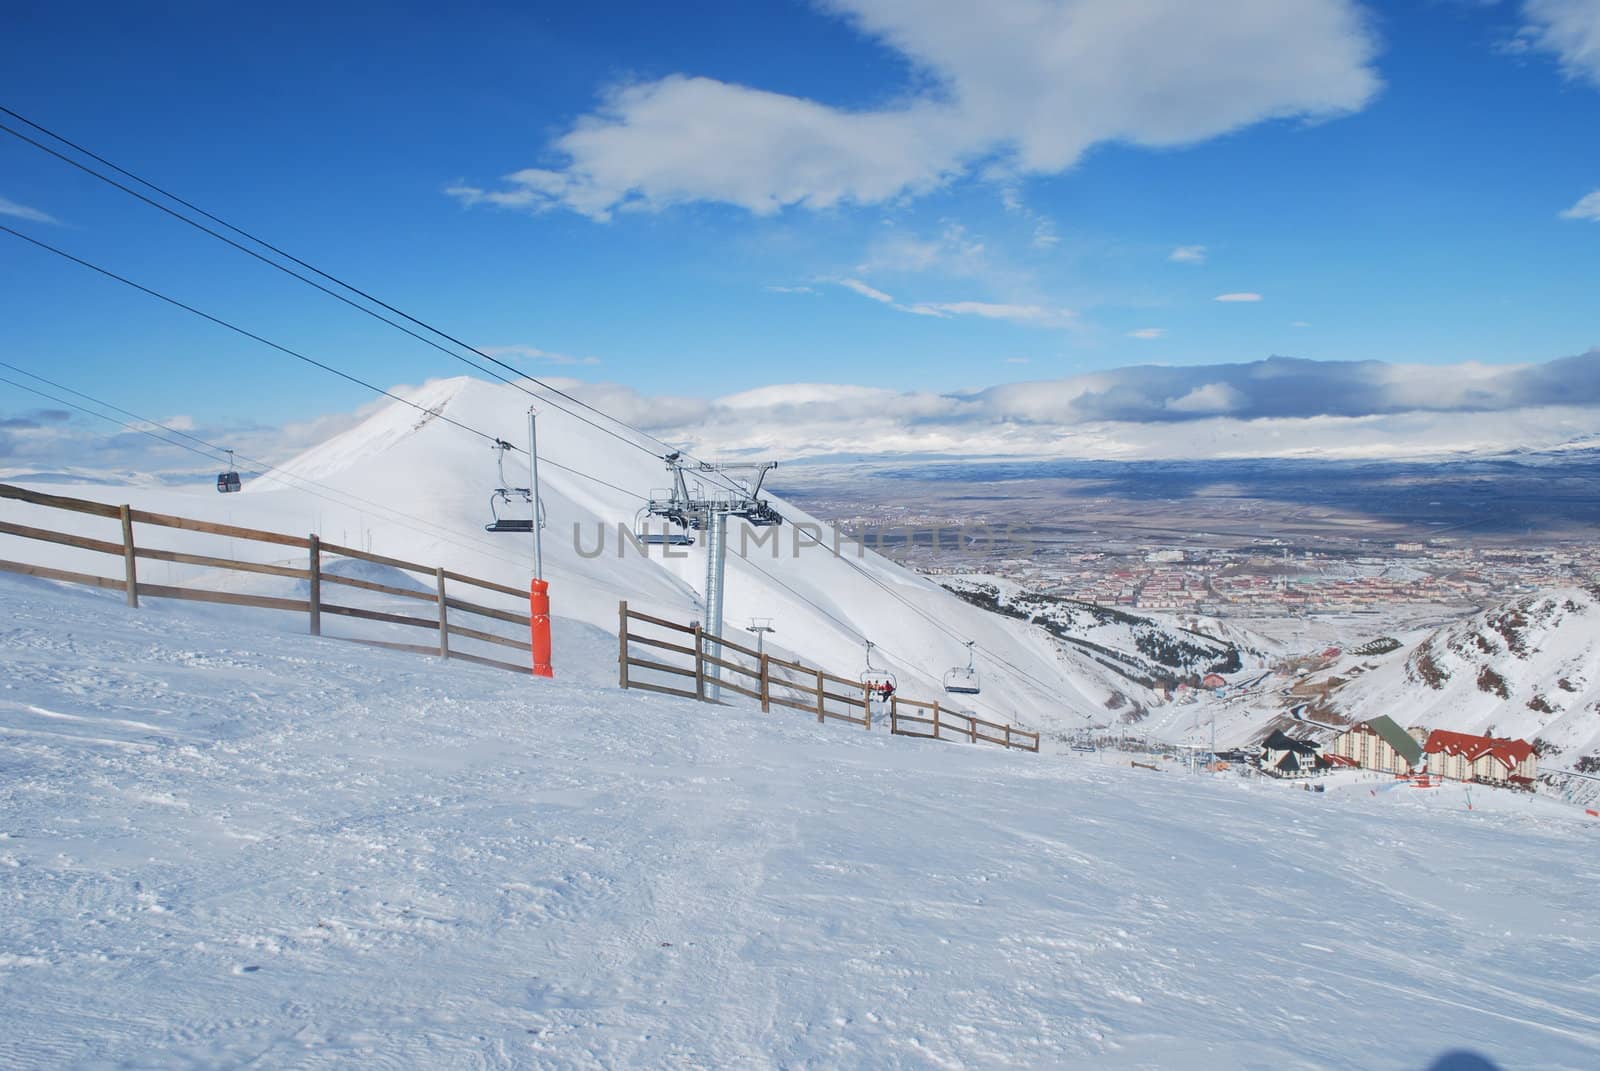 Ski Resort chair lift in Turkey Mountains.Palandoken